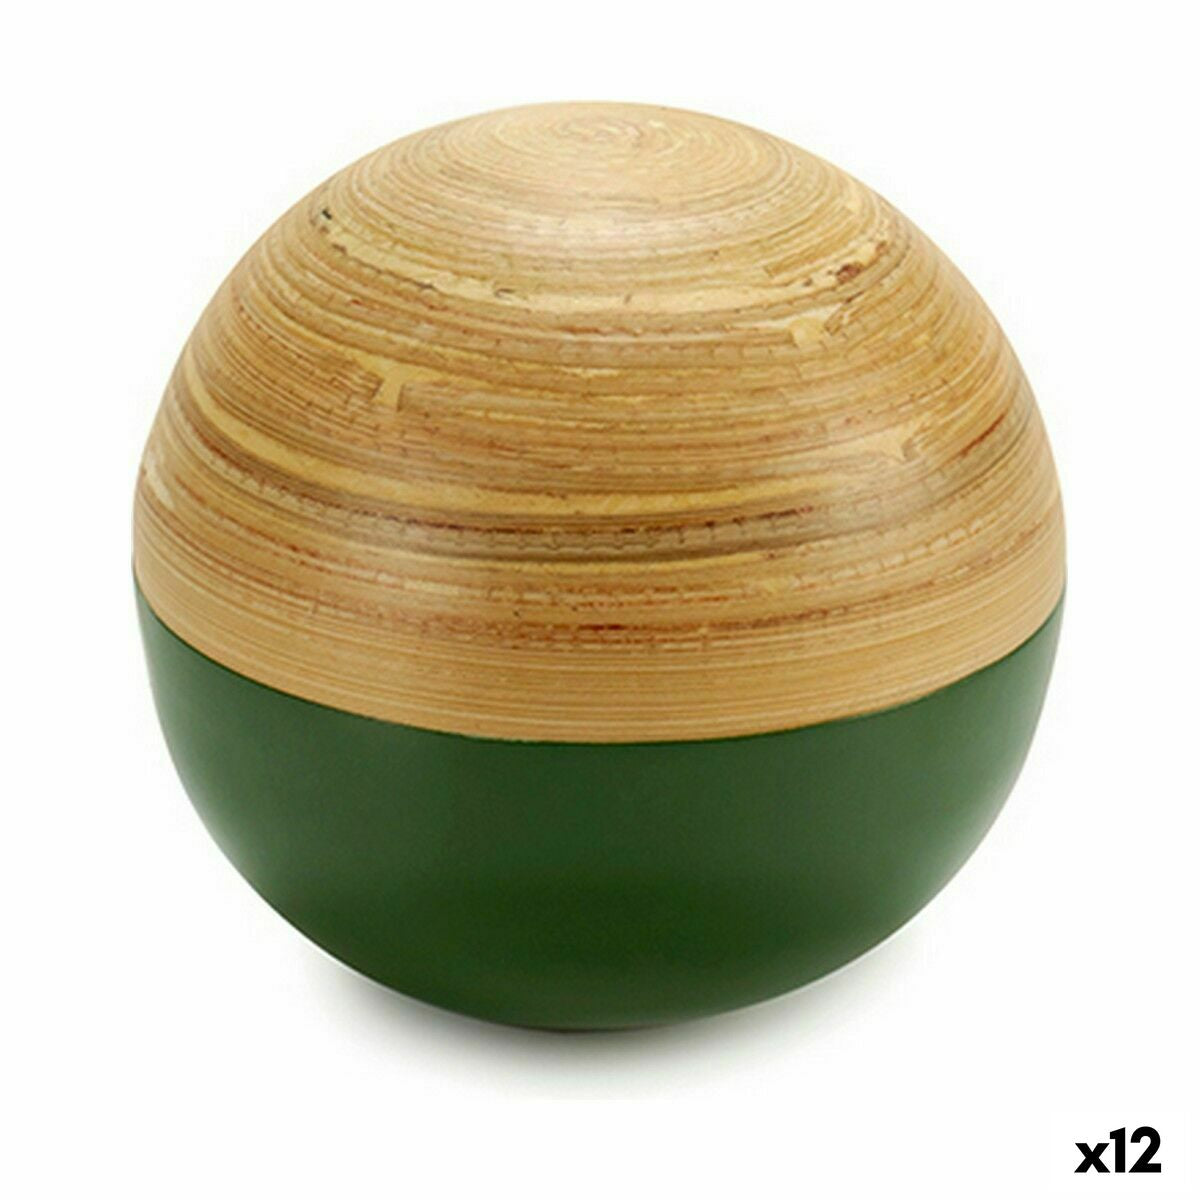 Decorative Figure Ball Brown Green Bamboo 10 x 10 x 10 cm (12 Units)